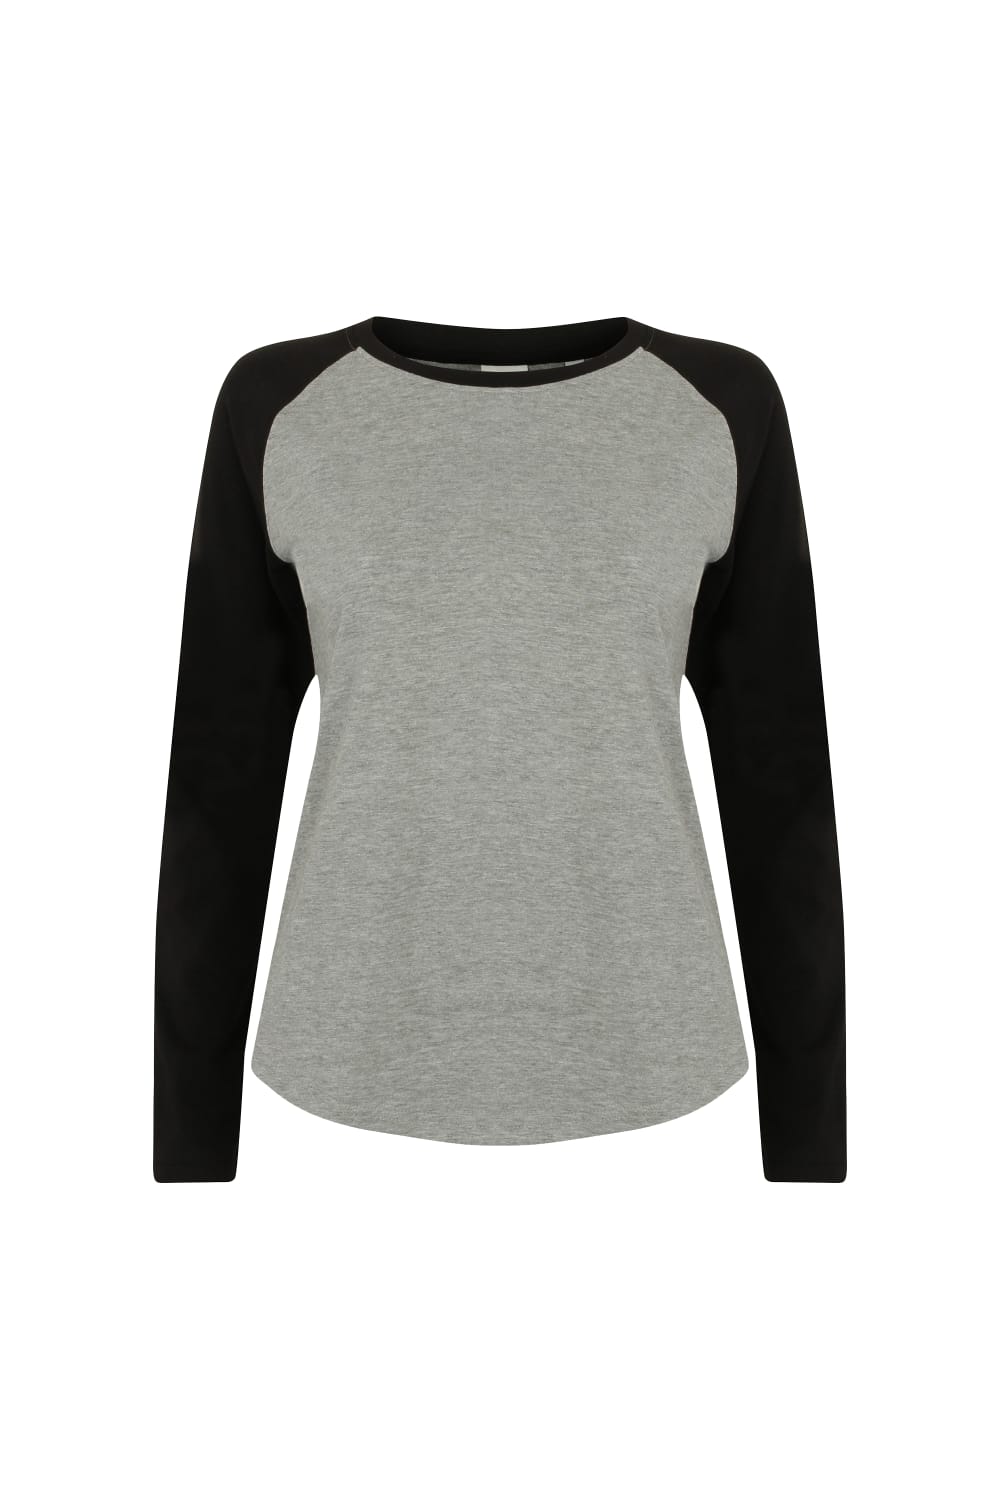 Skinnifit Womens/Ladies Long Sleeve Baseball T-Shirt (Heather Gray / Black)